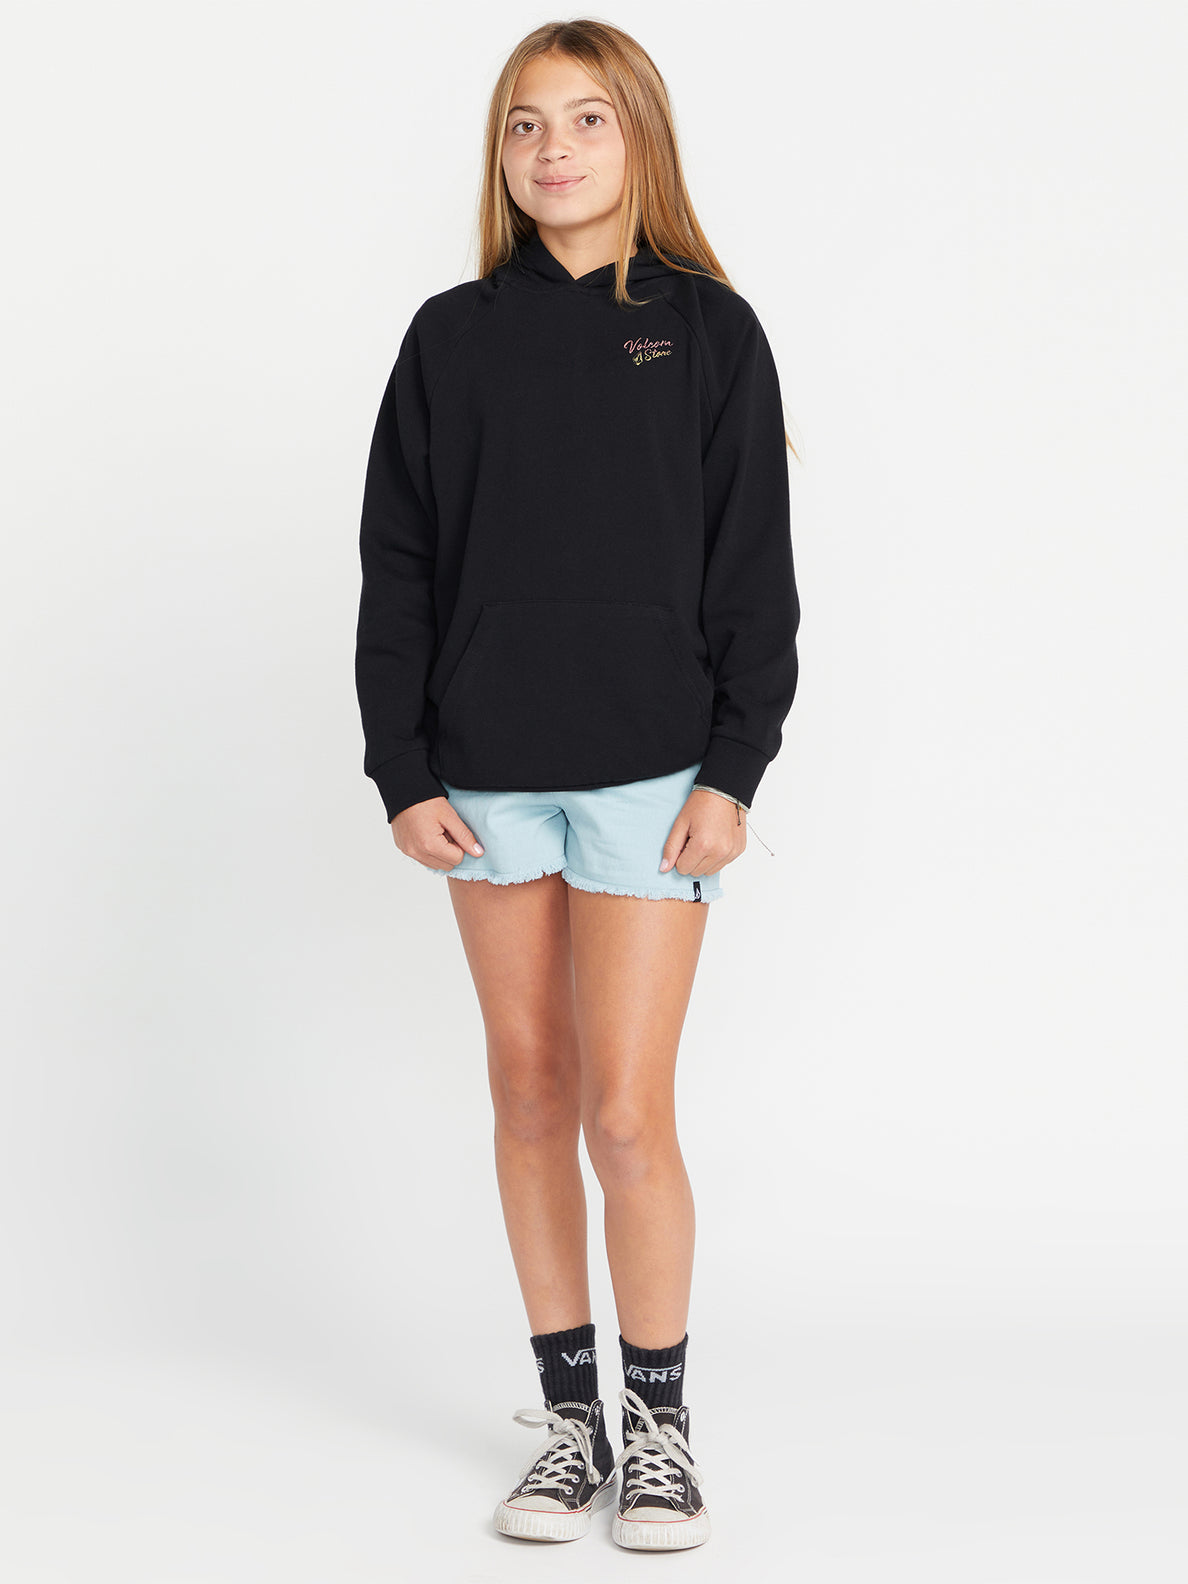 Girls Truly Stoked Boyfriend Sweatshirt - Black (R4112300_BLK) [3]